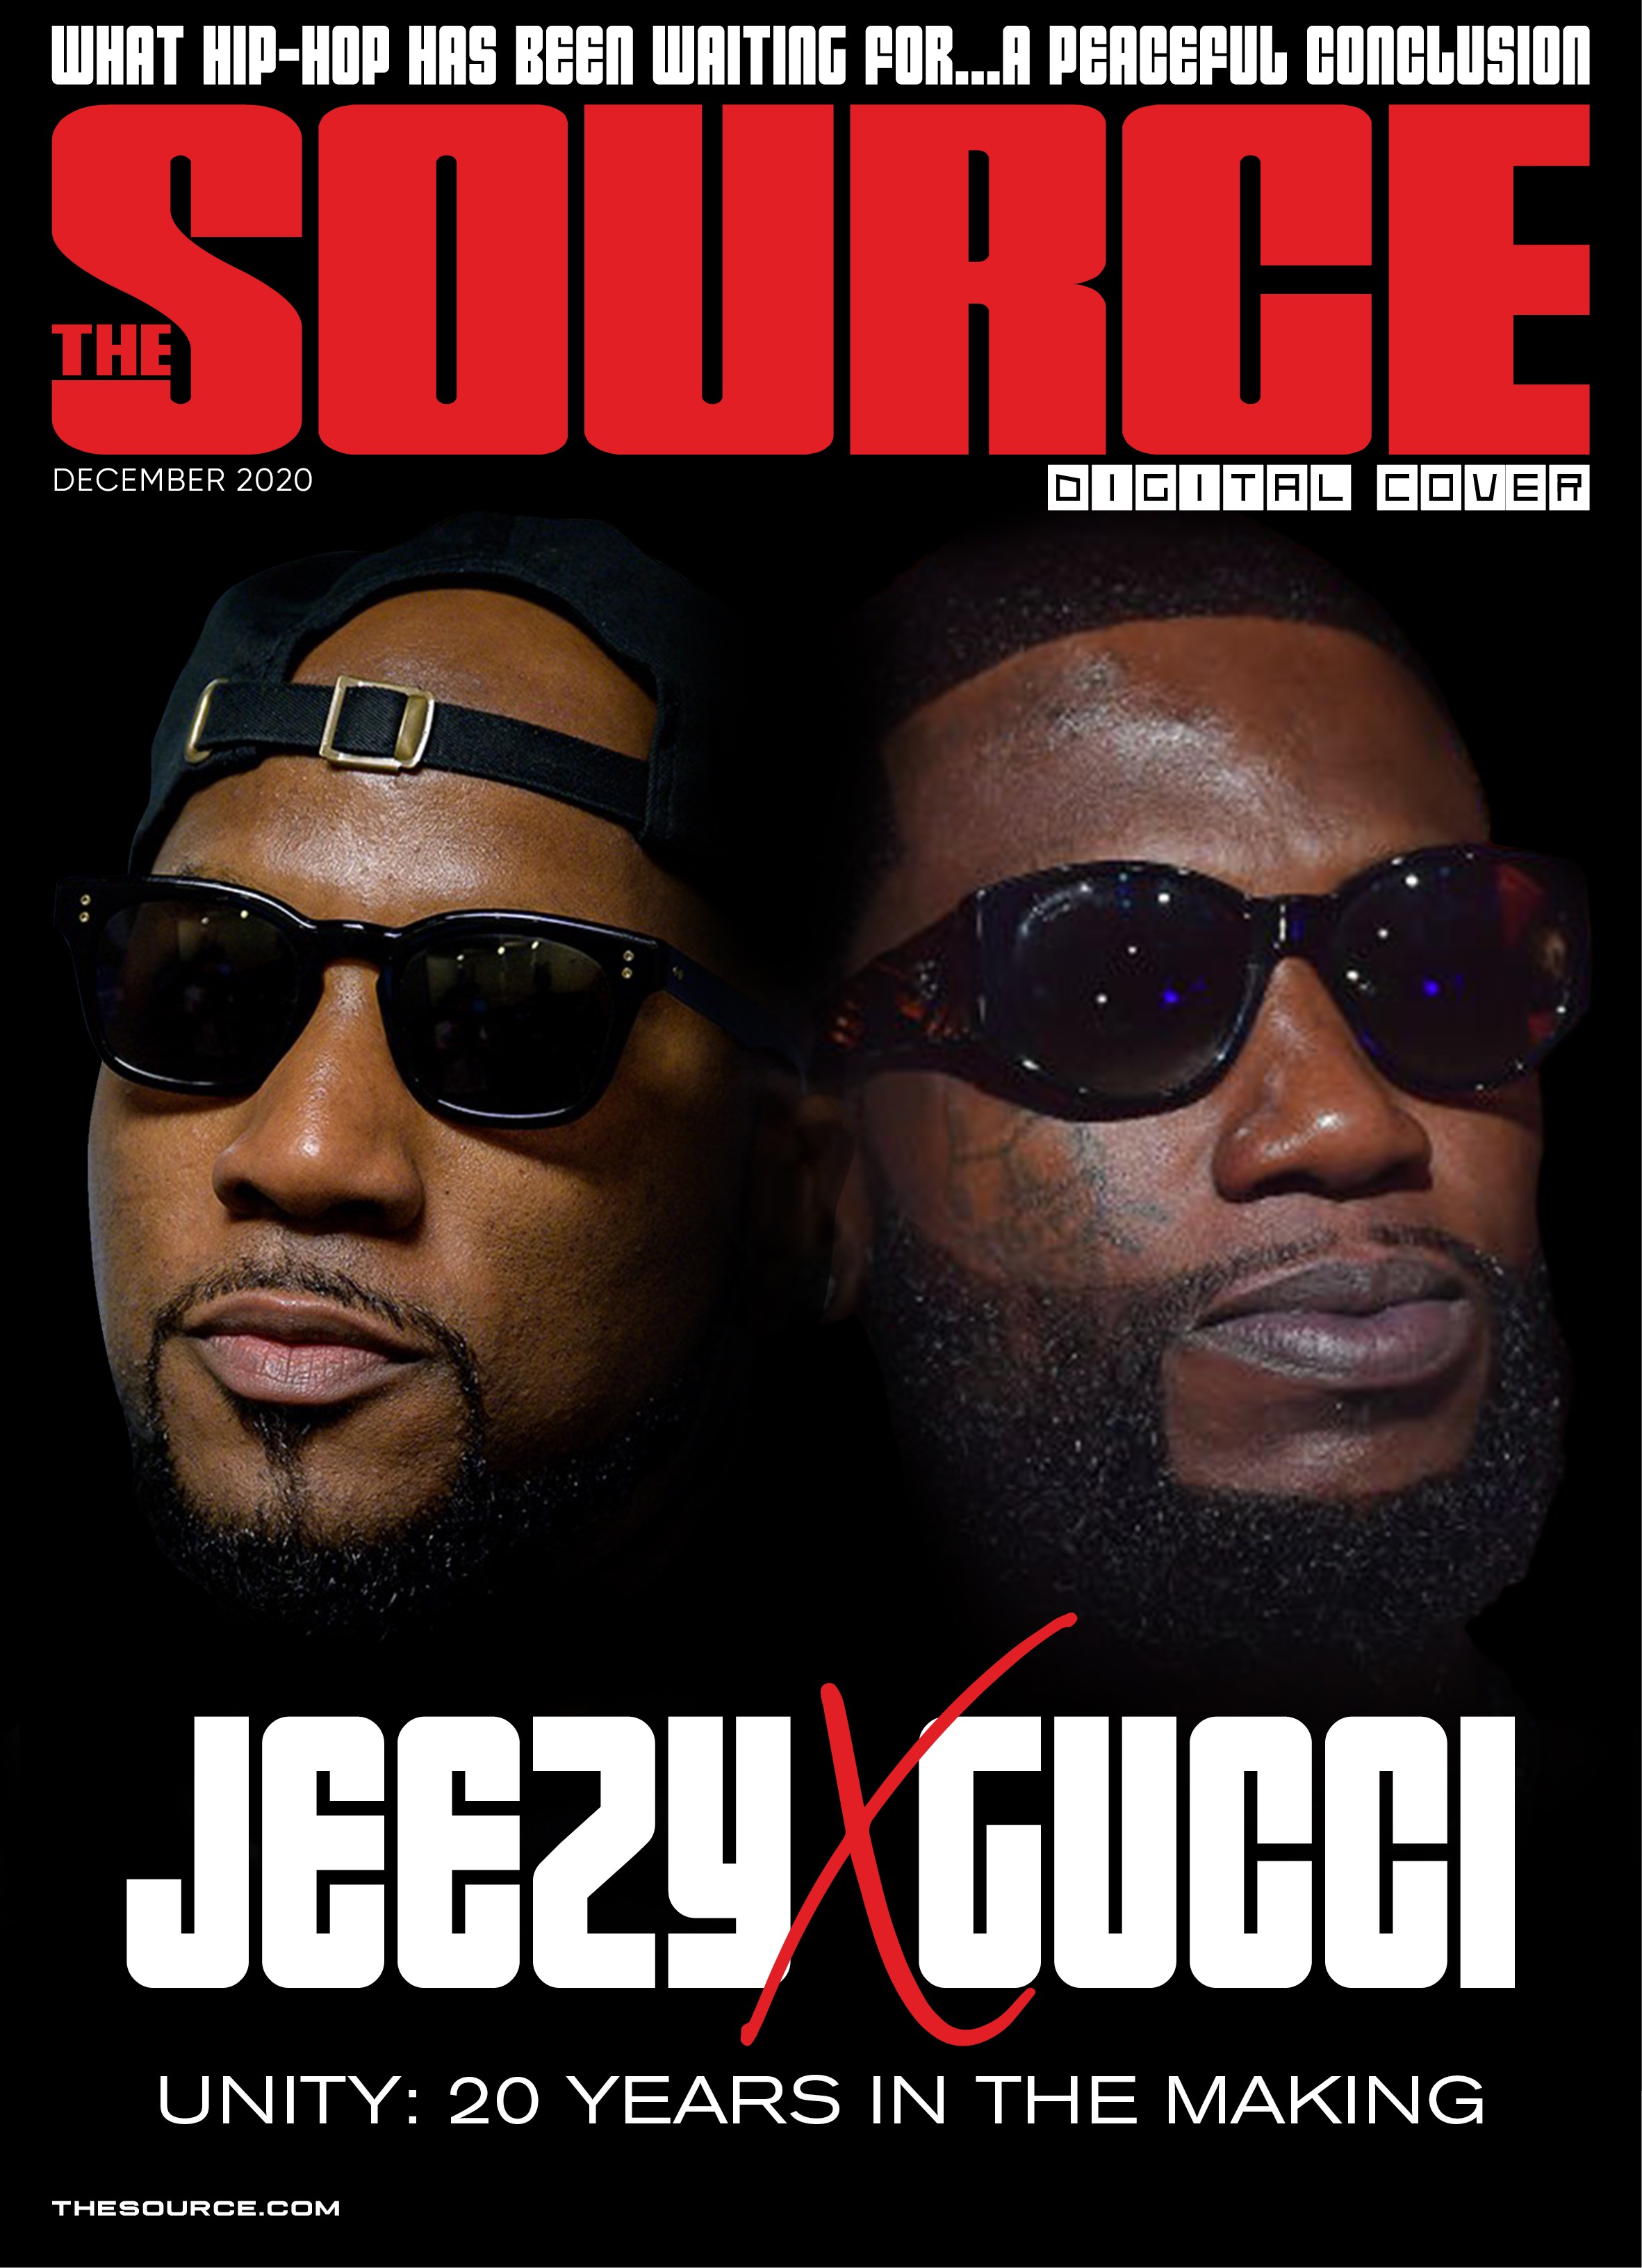 mængde af salg dekorere balkon The Source Magazine on Twitter: "DECEMBER DIGITAL COVER: Jeezy☃️ x Gucci  Mane 🥶 In honor of #VERZUZ hosting a historic night in Hip-Hop, The Source  is celebrating cultural unity for our last